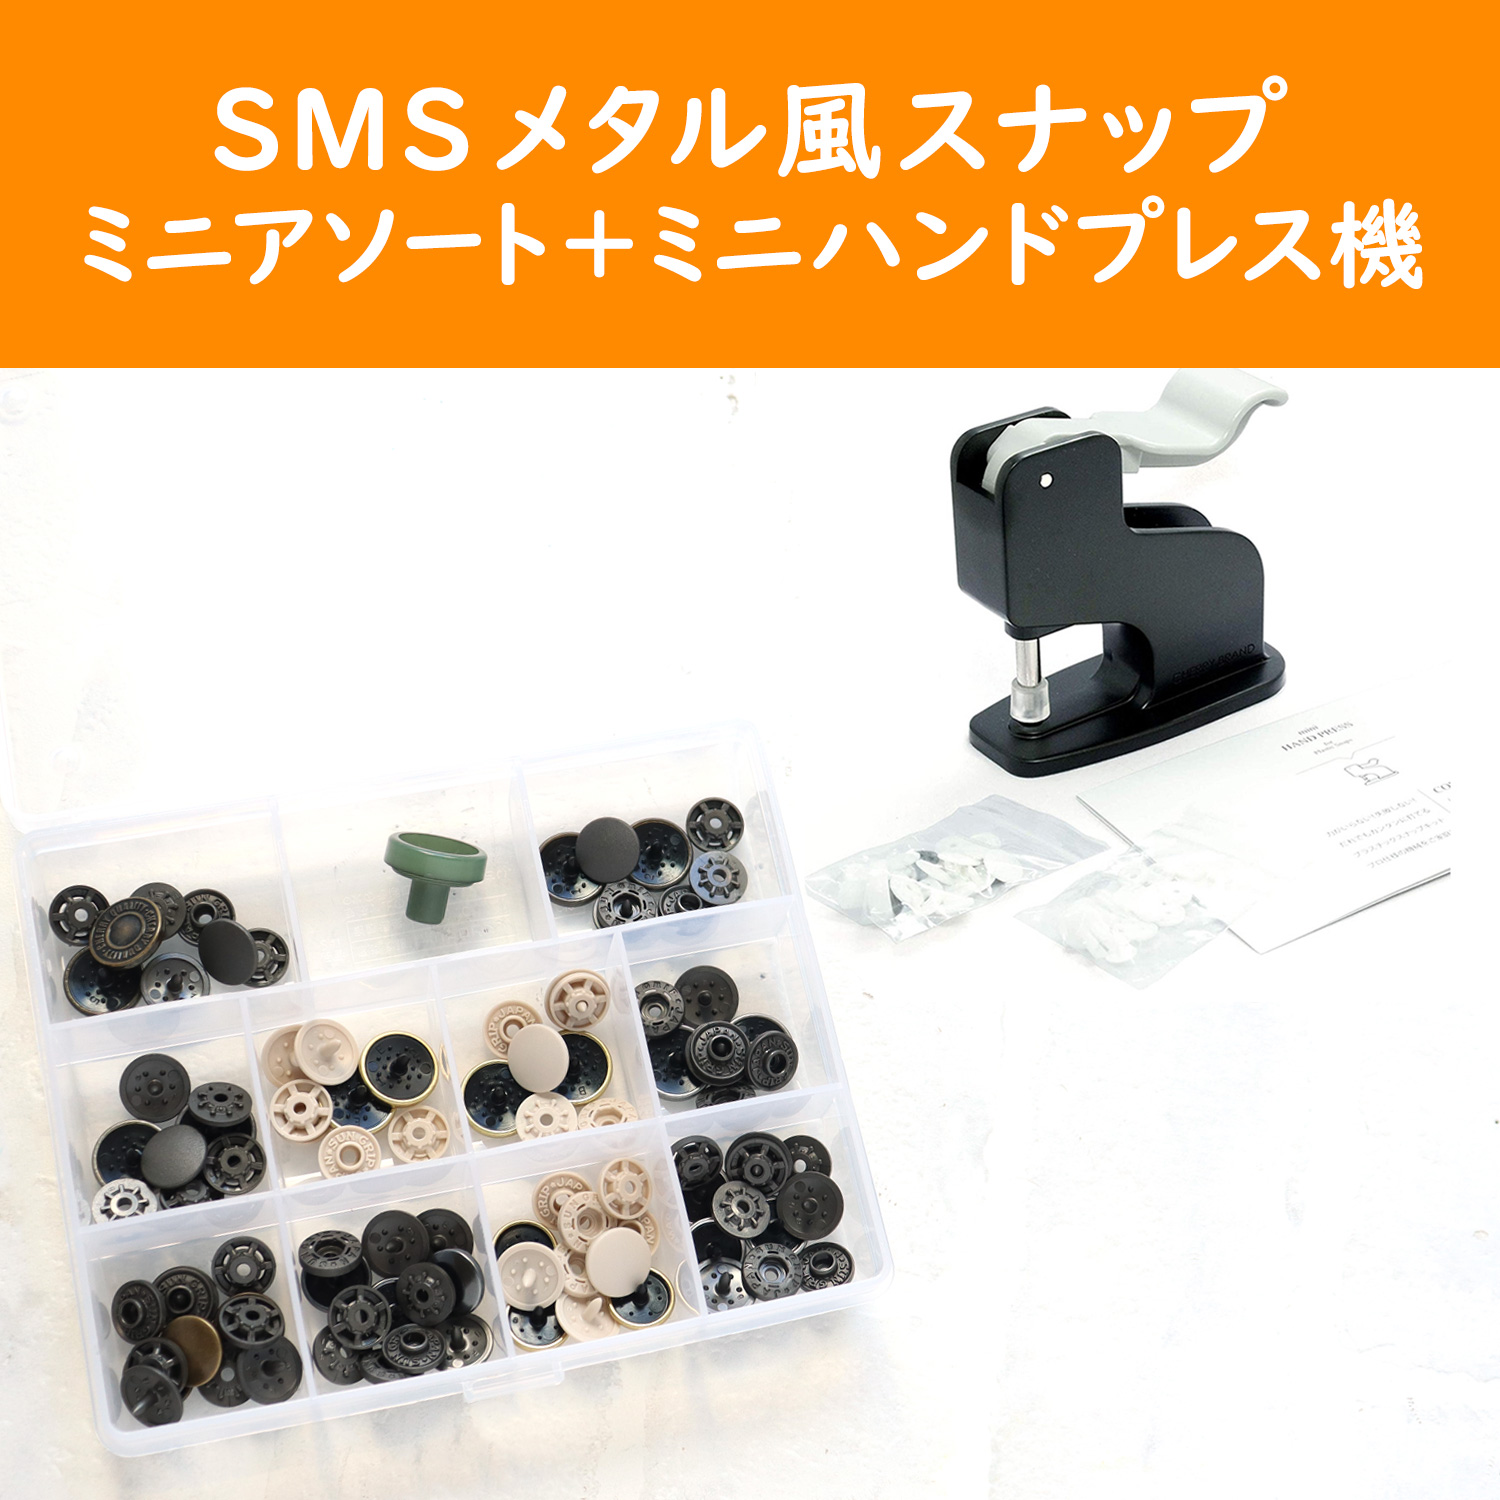 SMS-MINISET-CL　メタル風スナップミニアソート＋ミニハンドプレス機セット (セット)